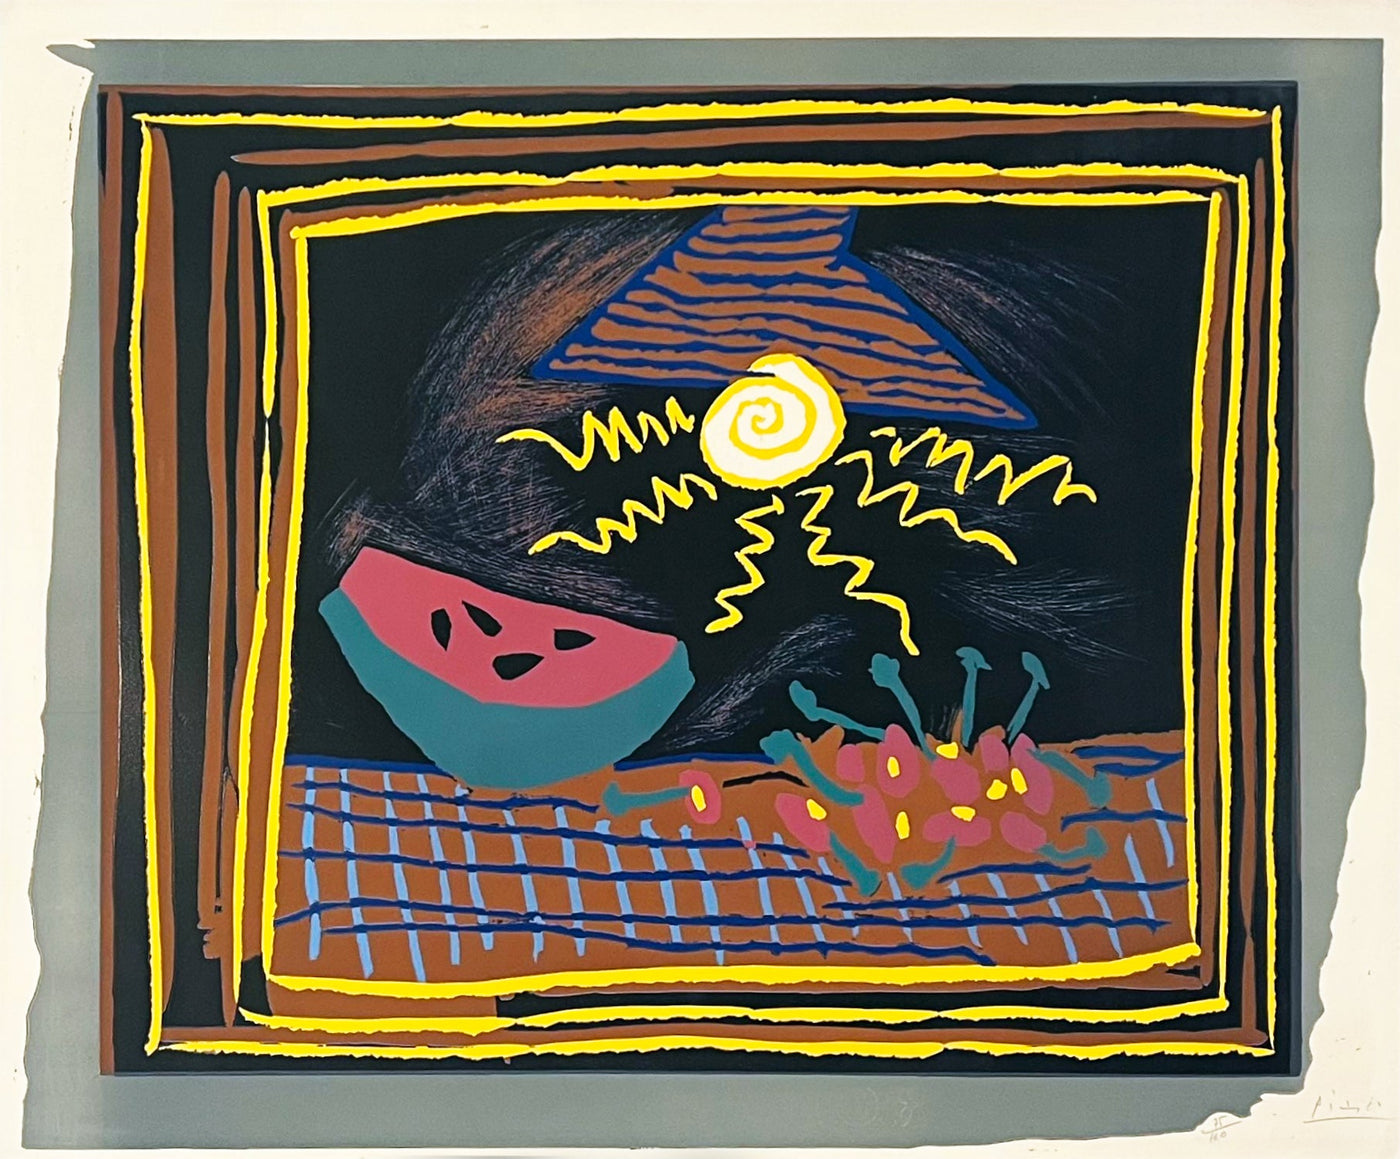 Pablo Picasso Nature morte a la pasteque (Still Life with Watermelon and Cherries) (Bloch 1098, Baer 1301) 1962